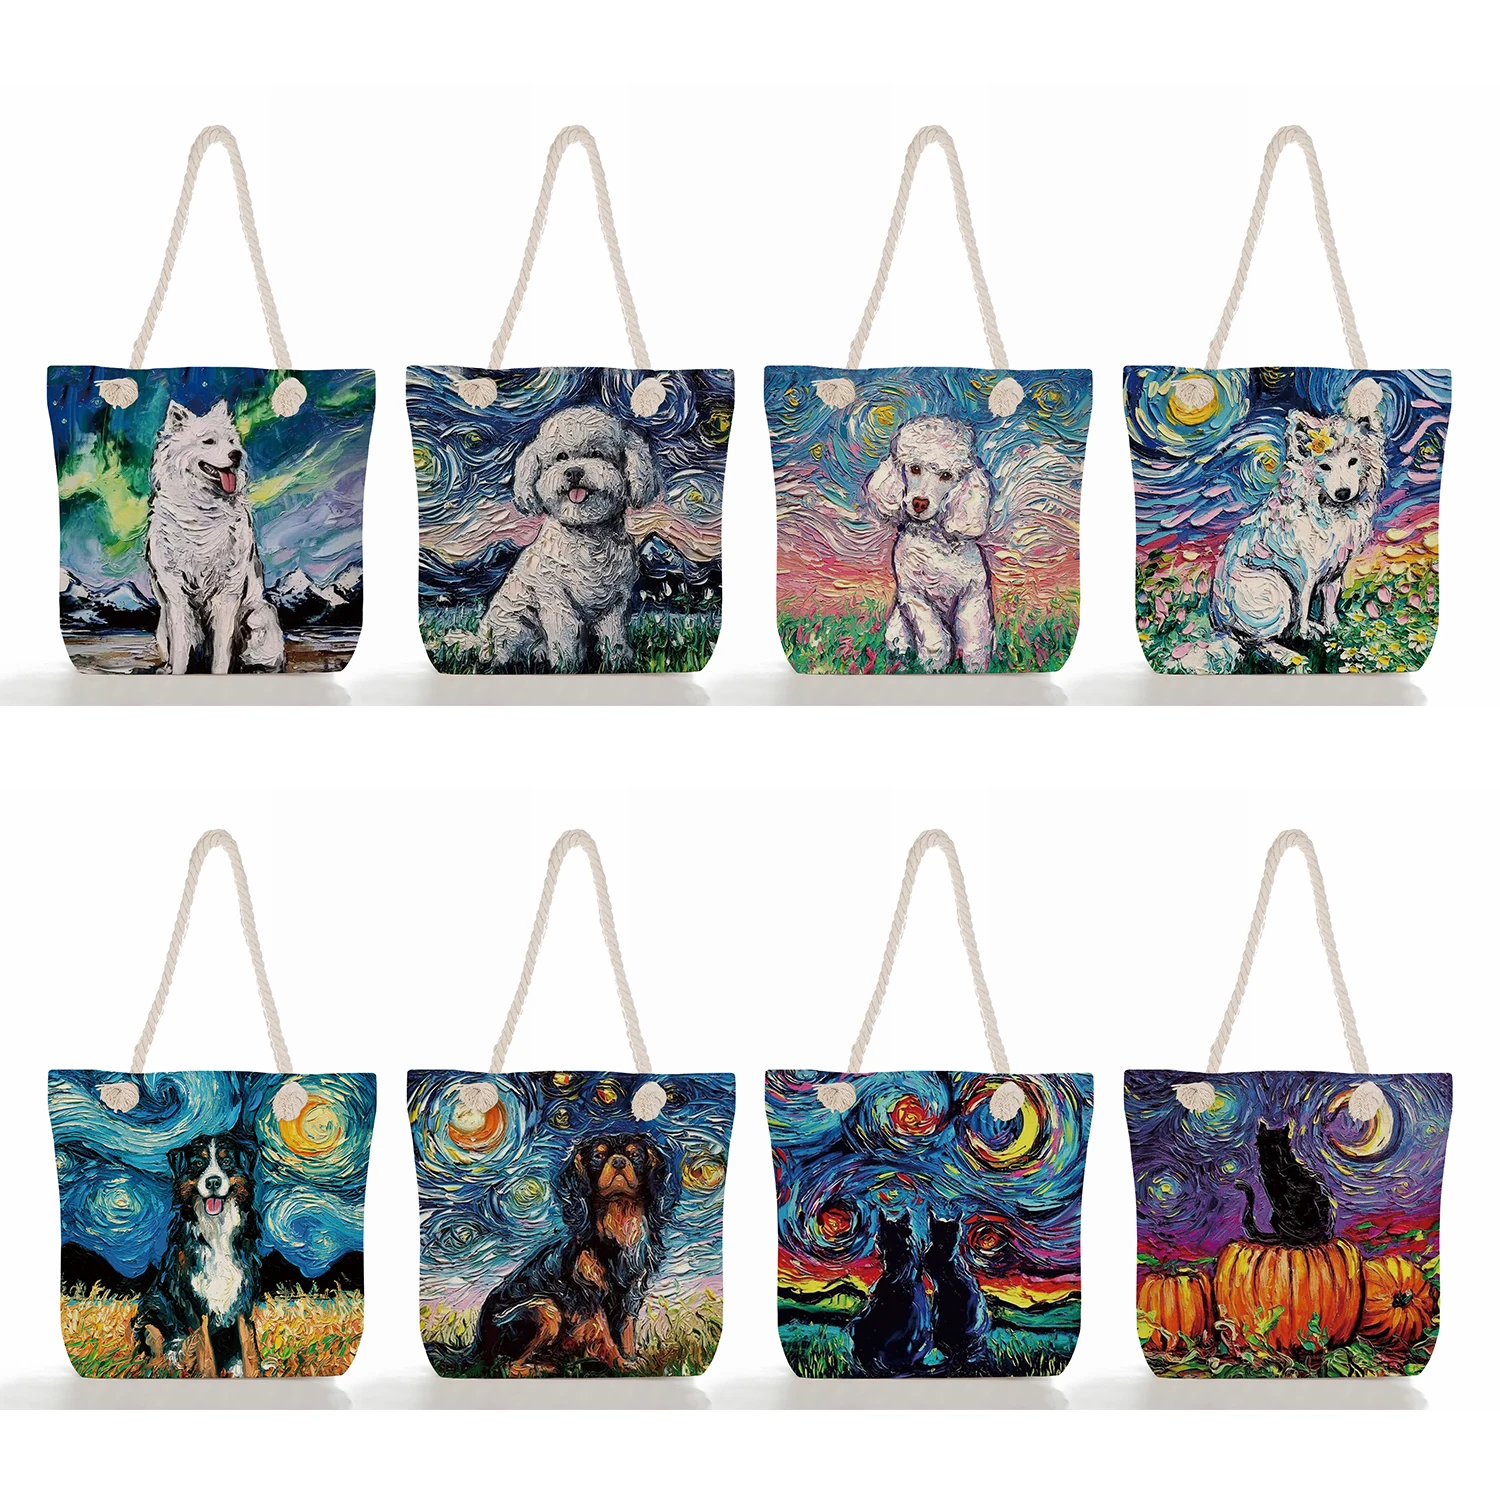 

Starry Sky Oil Painting Dog Handbags Bright Colors Linen The Tote Bag Animal Shoulder Bag Women Blue Fashion Travel Beach Bag